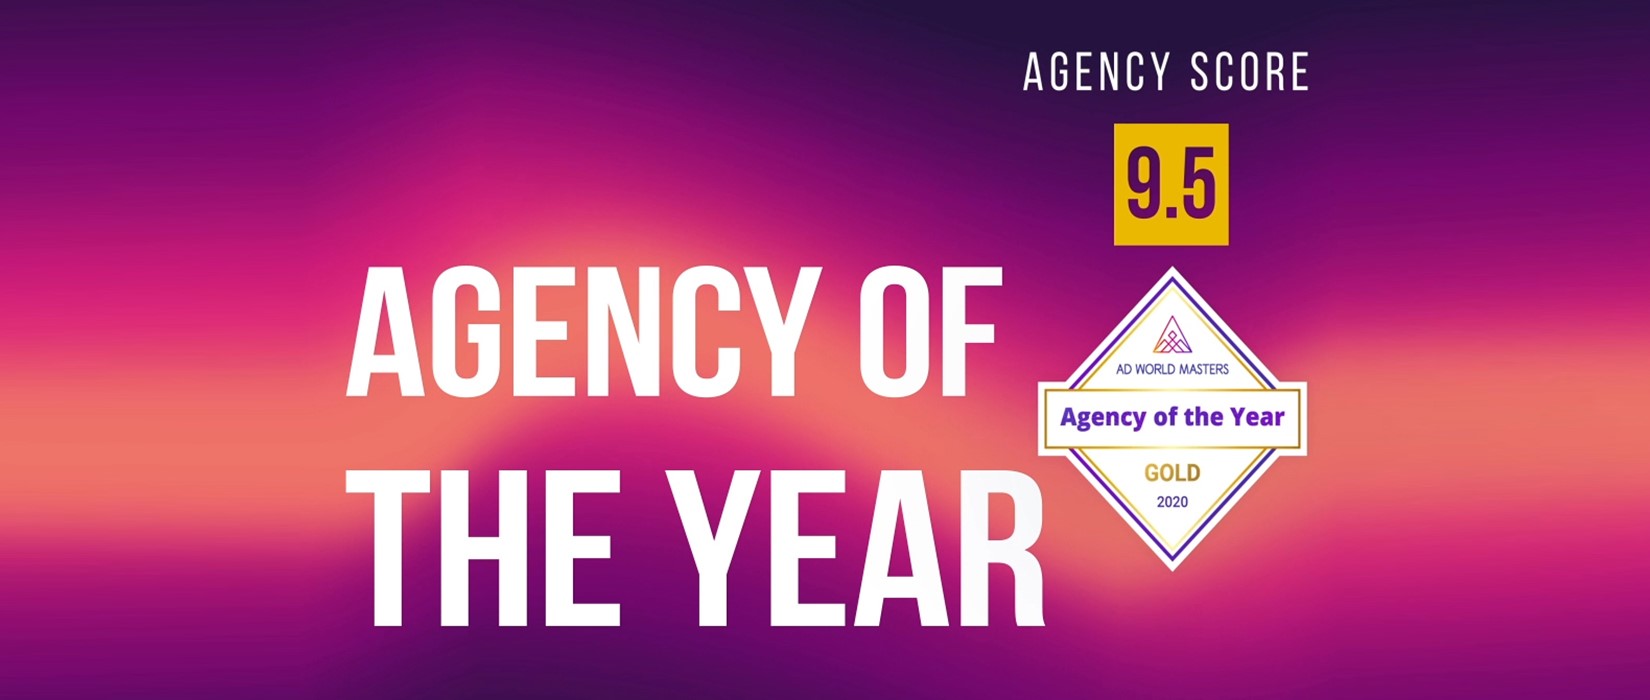 AdWorldMasters - Agency of the Year - 2020 